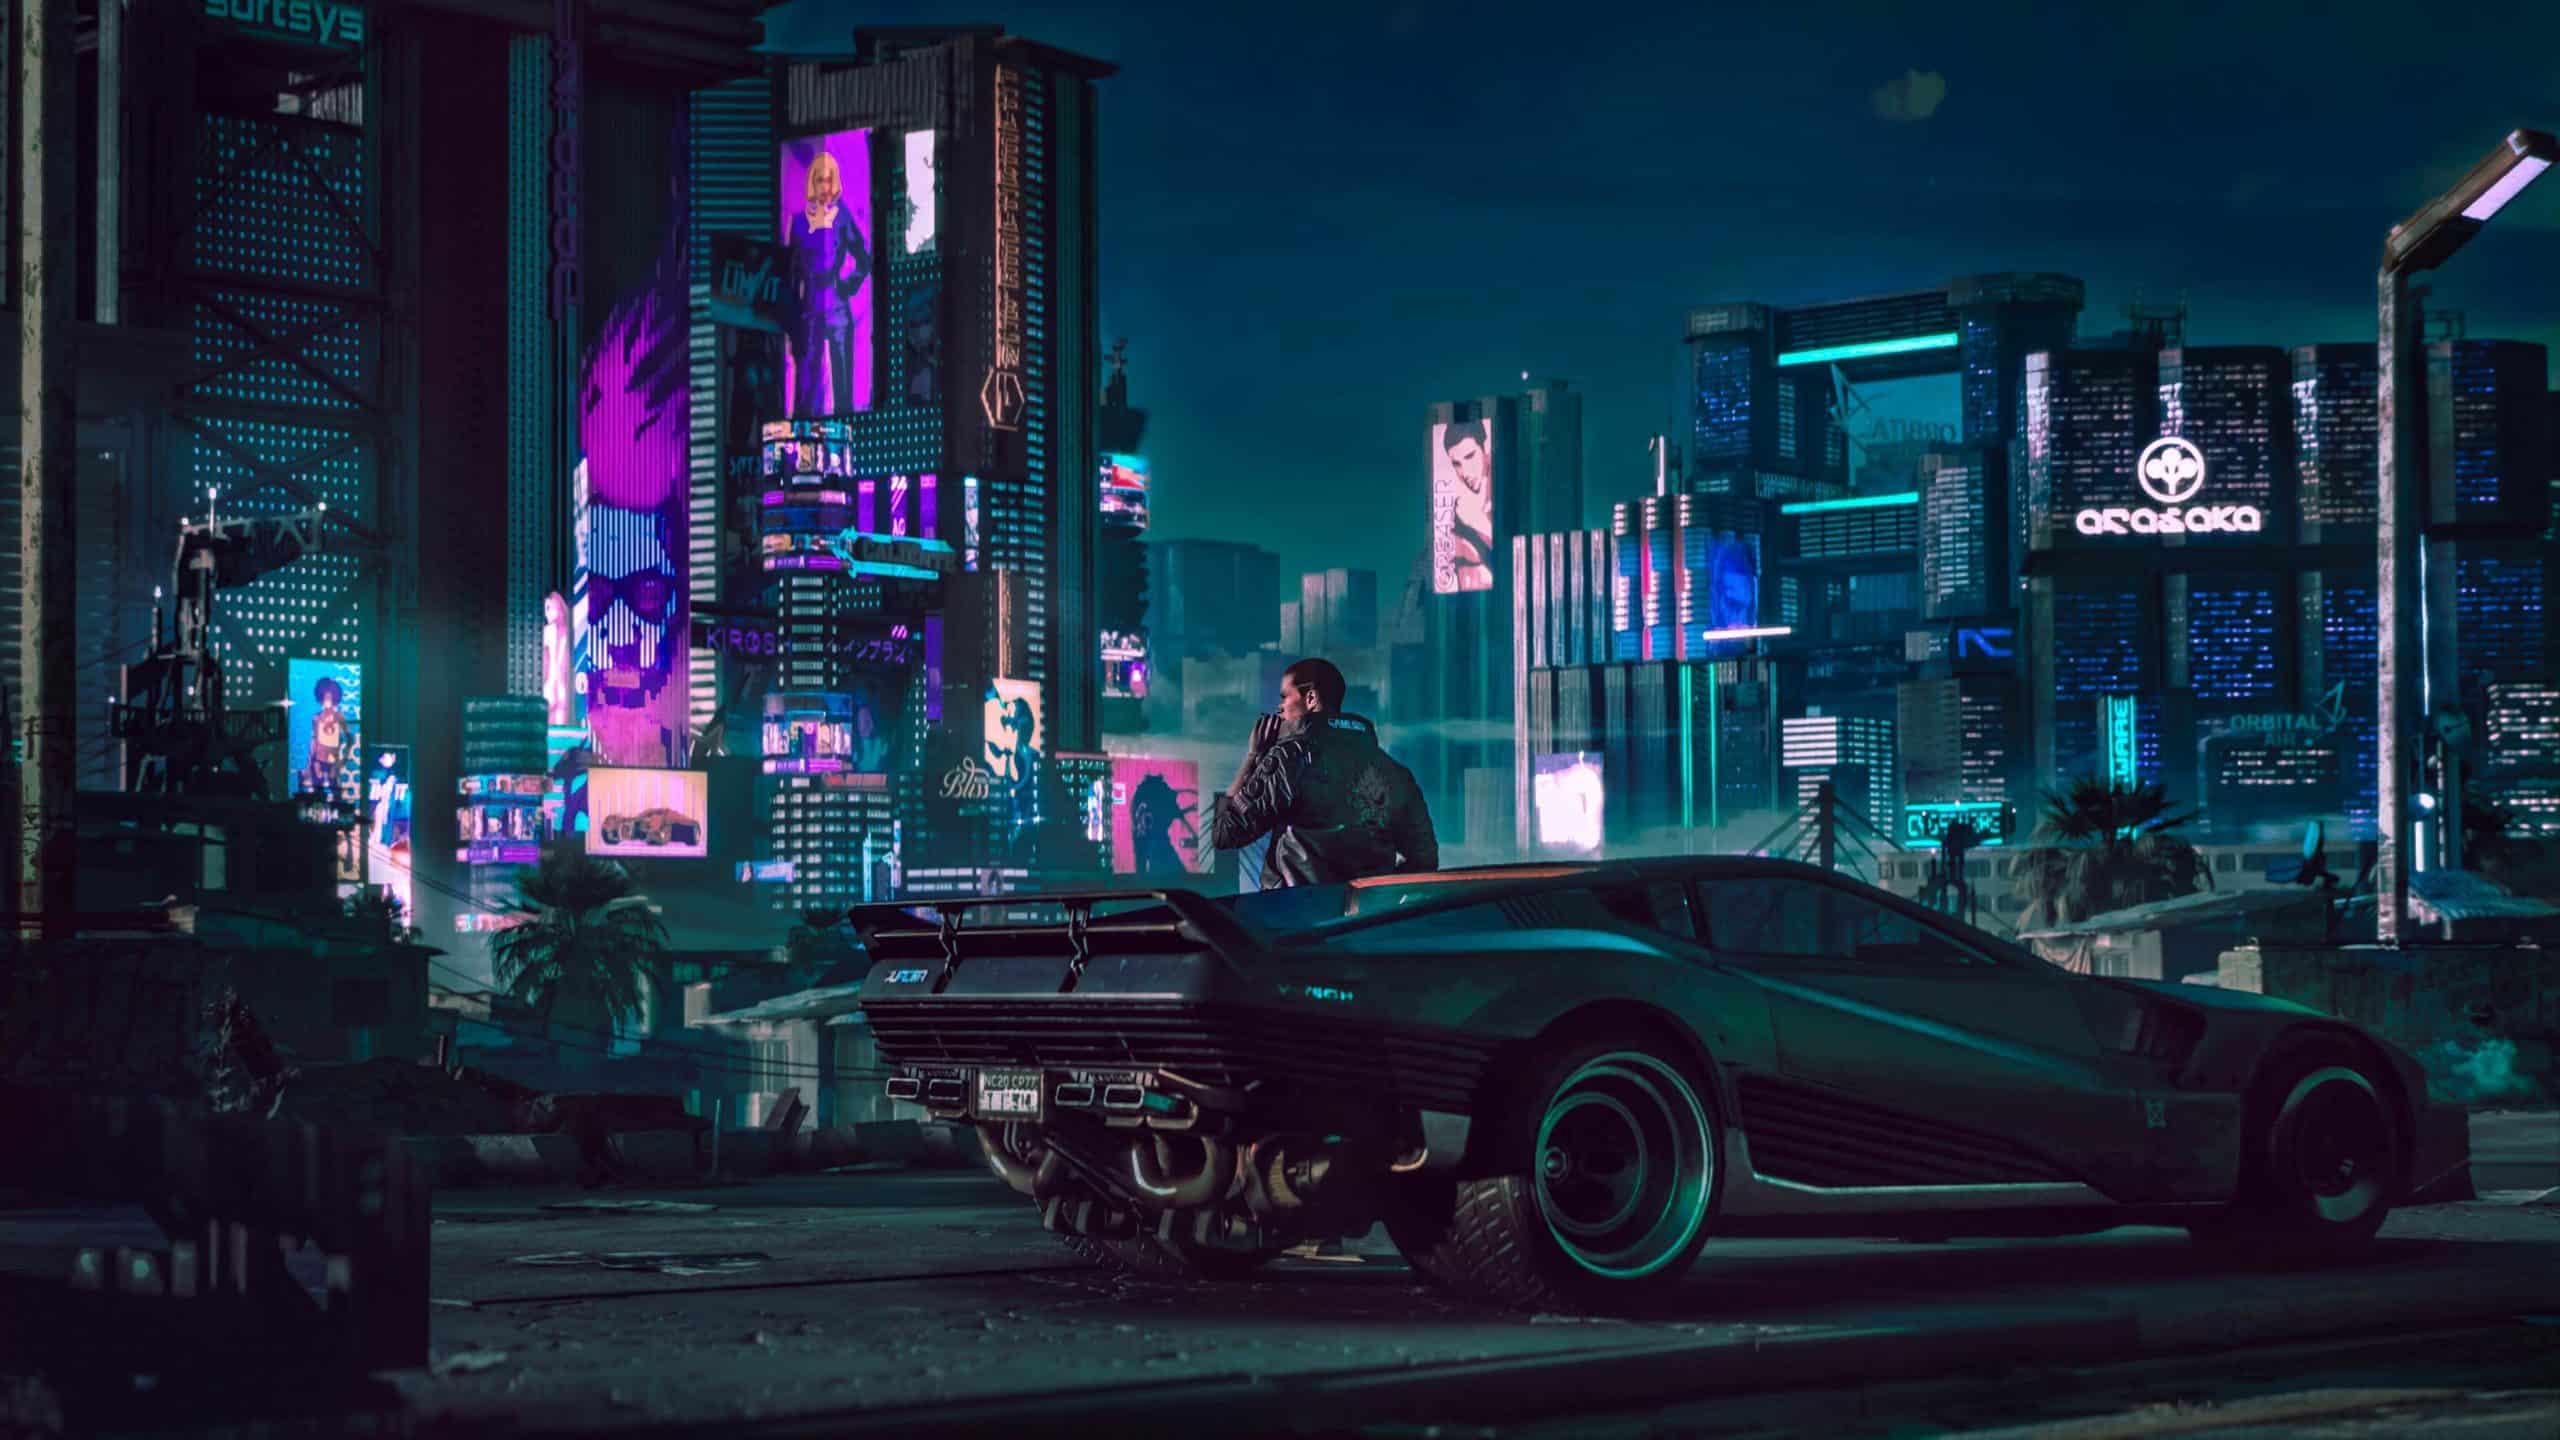 A Cyberpunk 2077 wallpaper of a man standing in front of a futuristic city at night. - Cyberpunk 2077